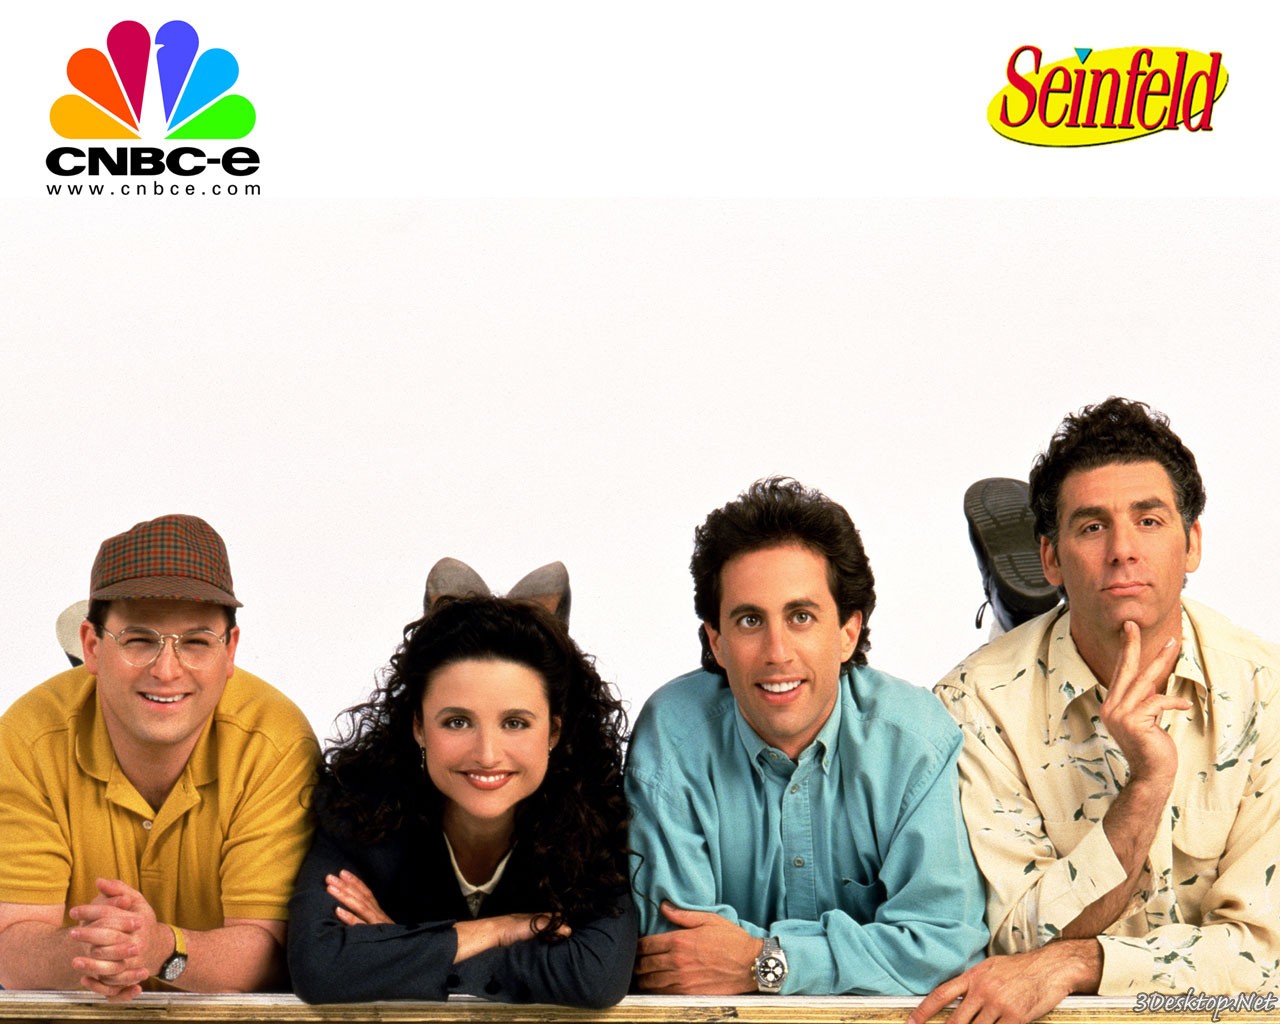 Seinfeld ★ - Memorable TV Photo (34853984) - Fanpop